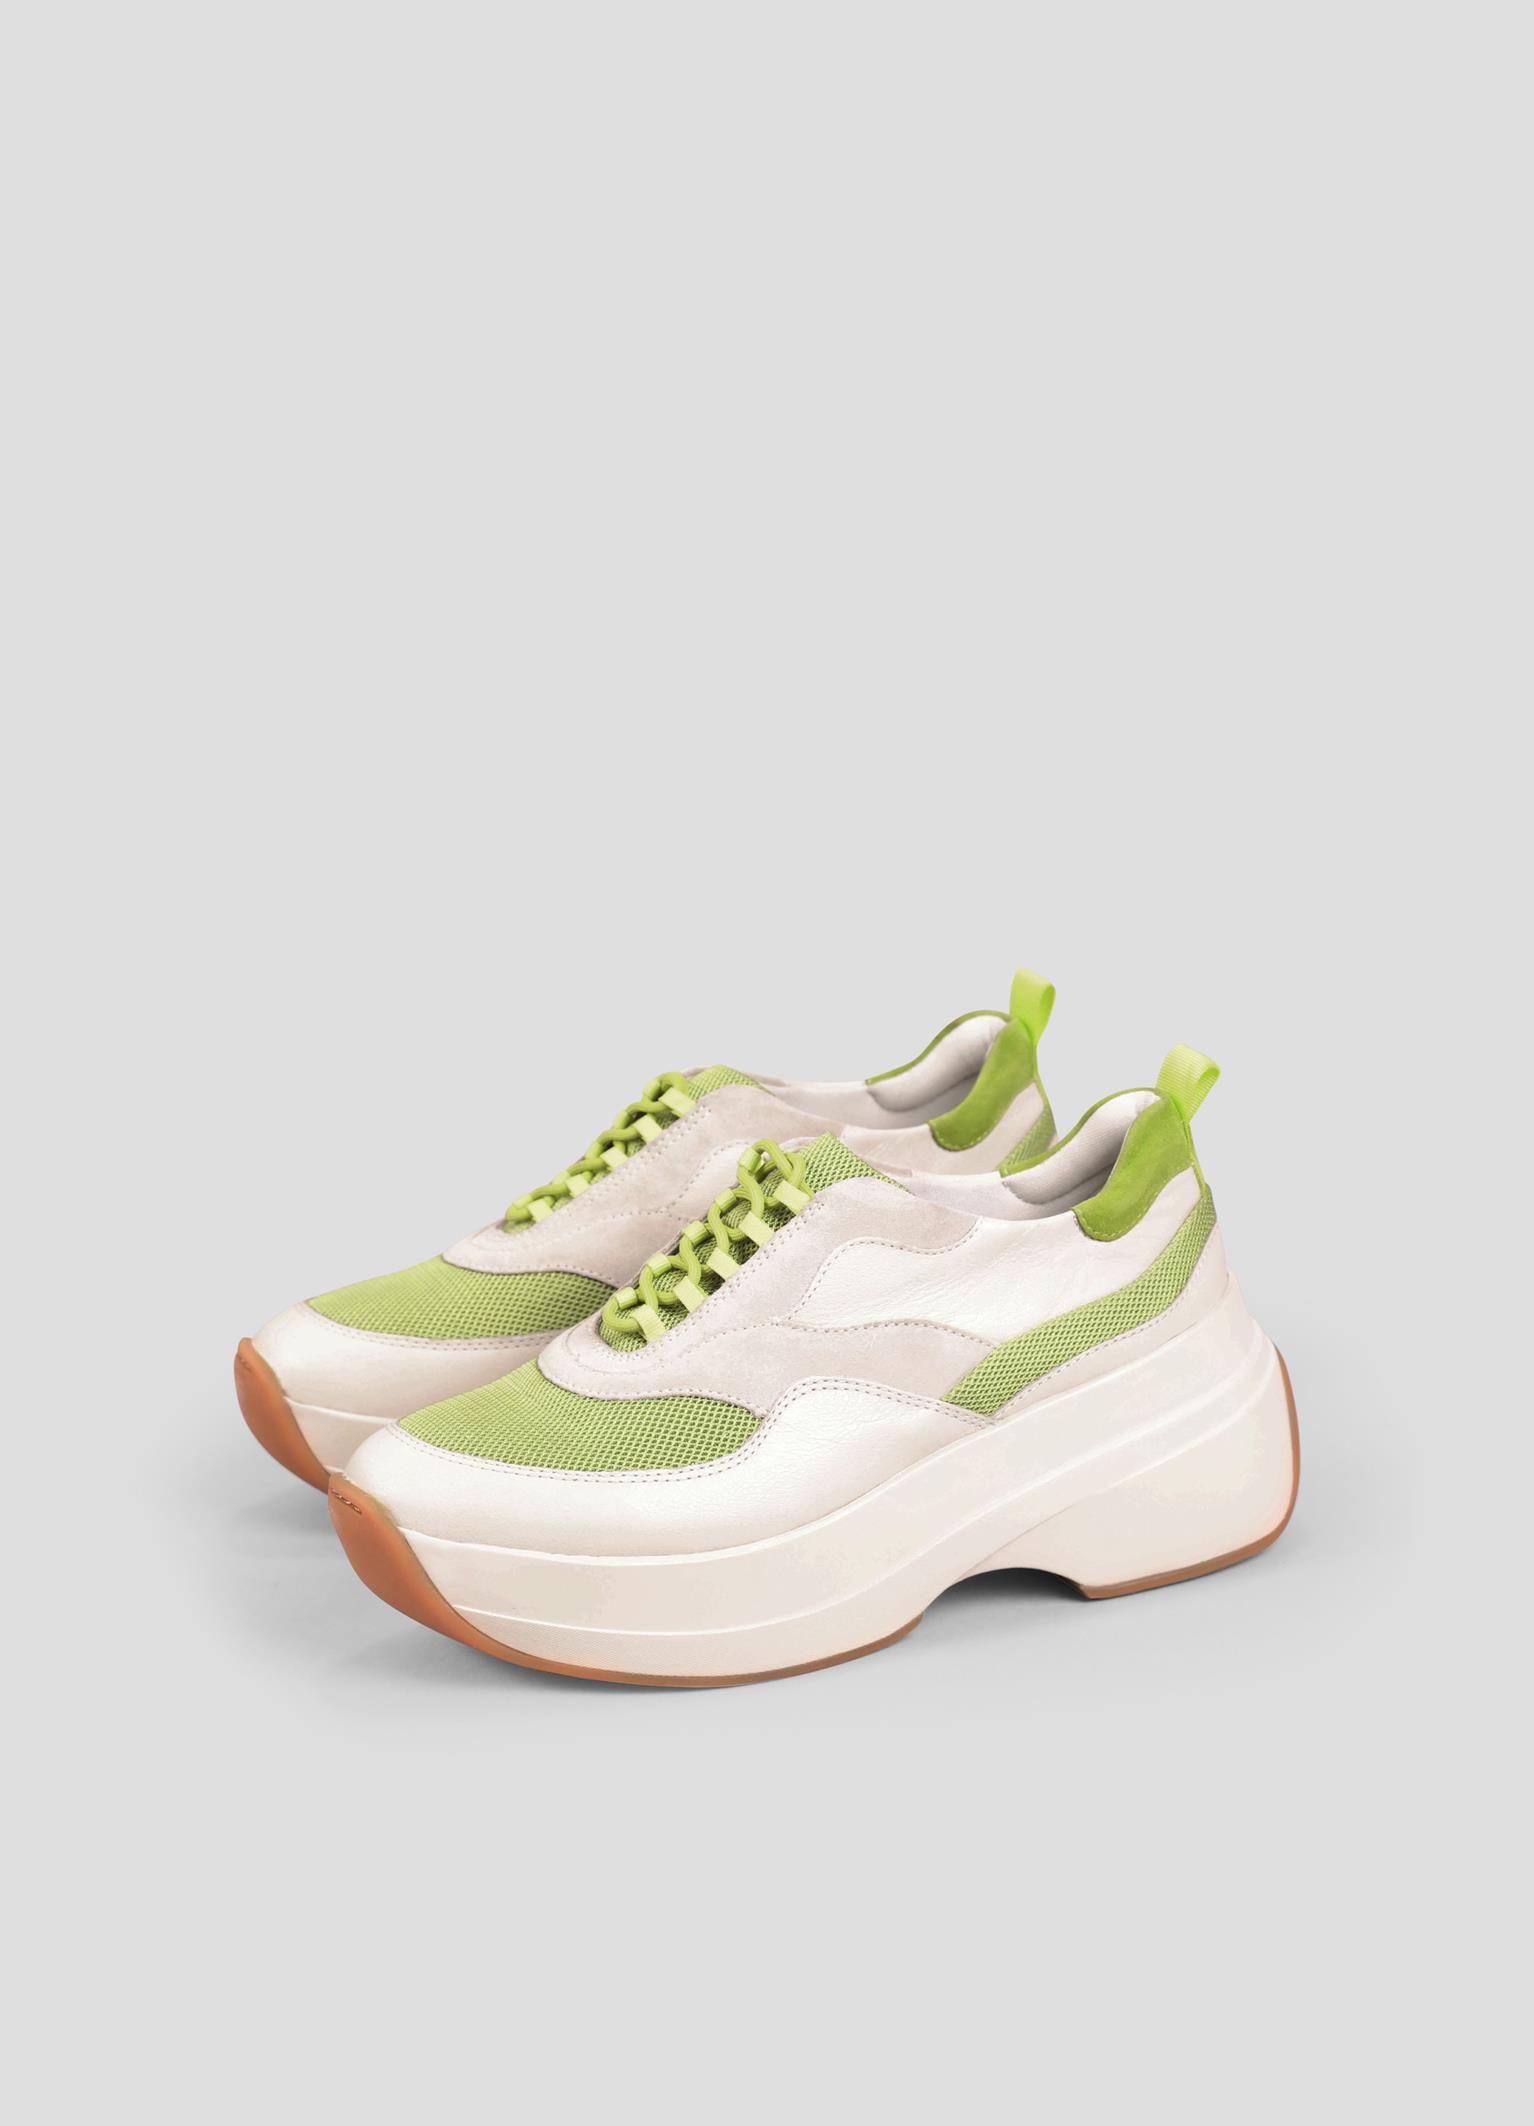 Vagabond - Sprint 2.0 Sneakers - Off white